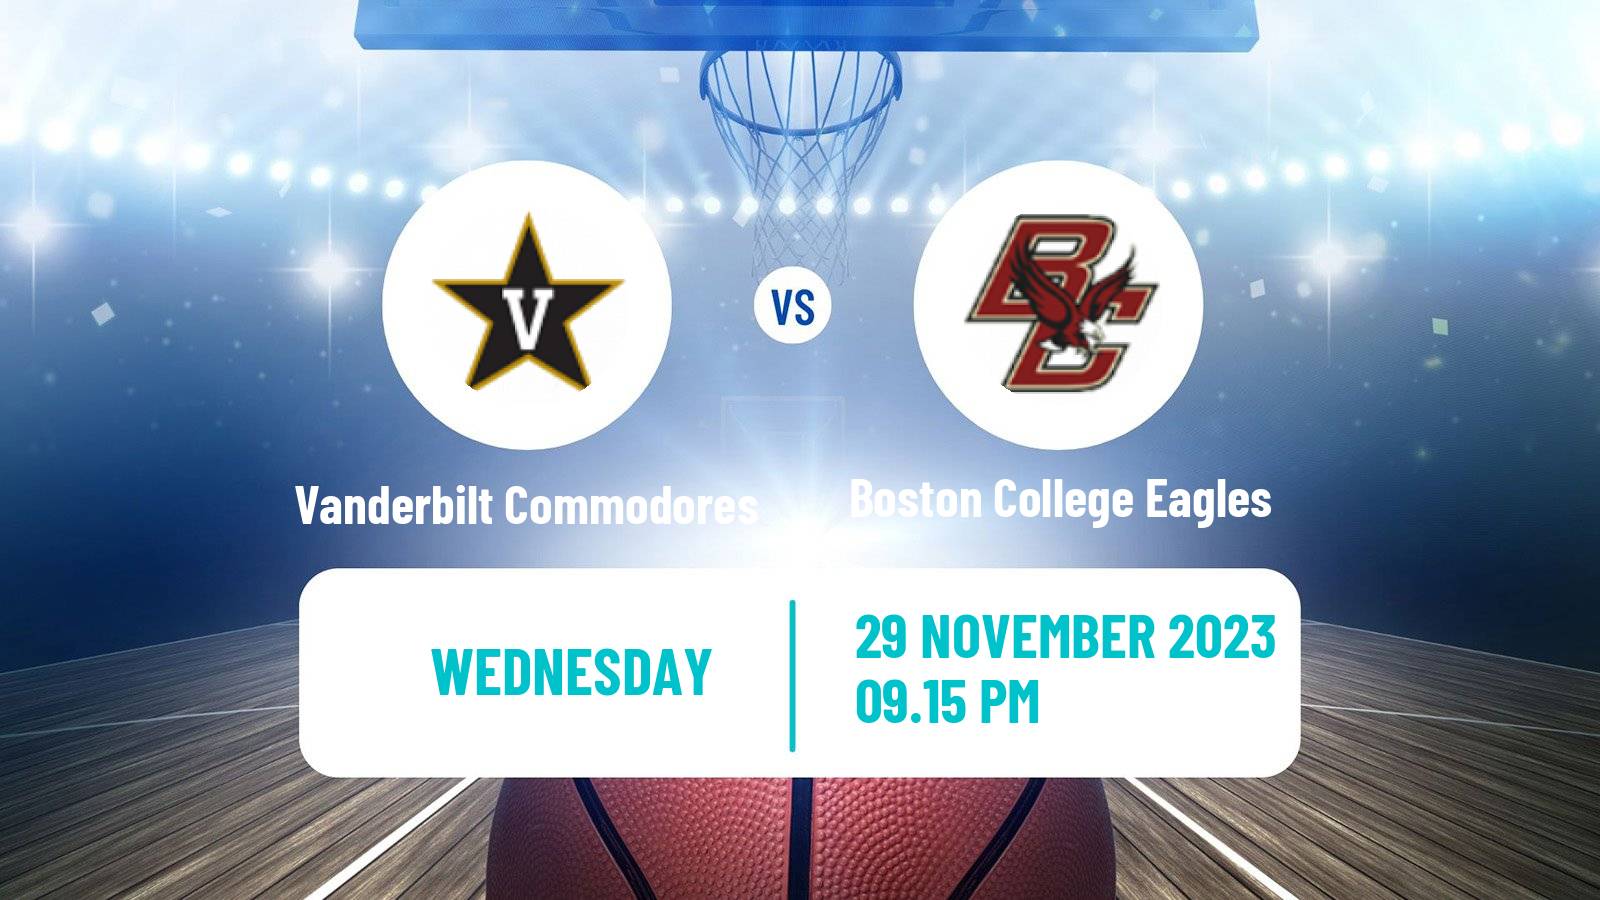 Basketball NCAA College Basketball Vanderbilt Commodores - Boston College Eagles